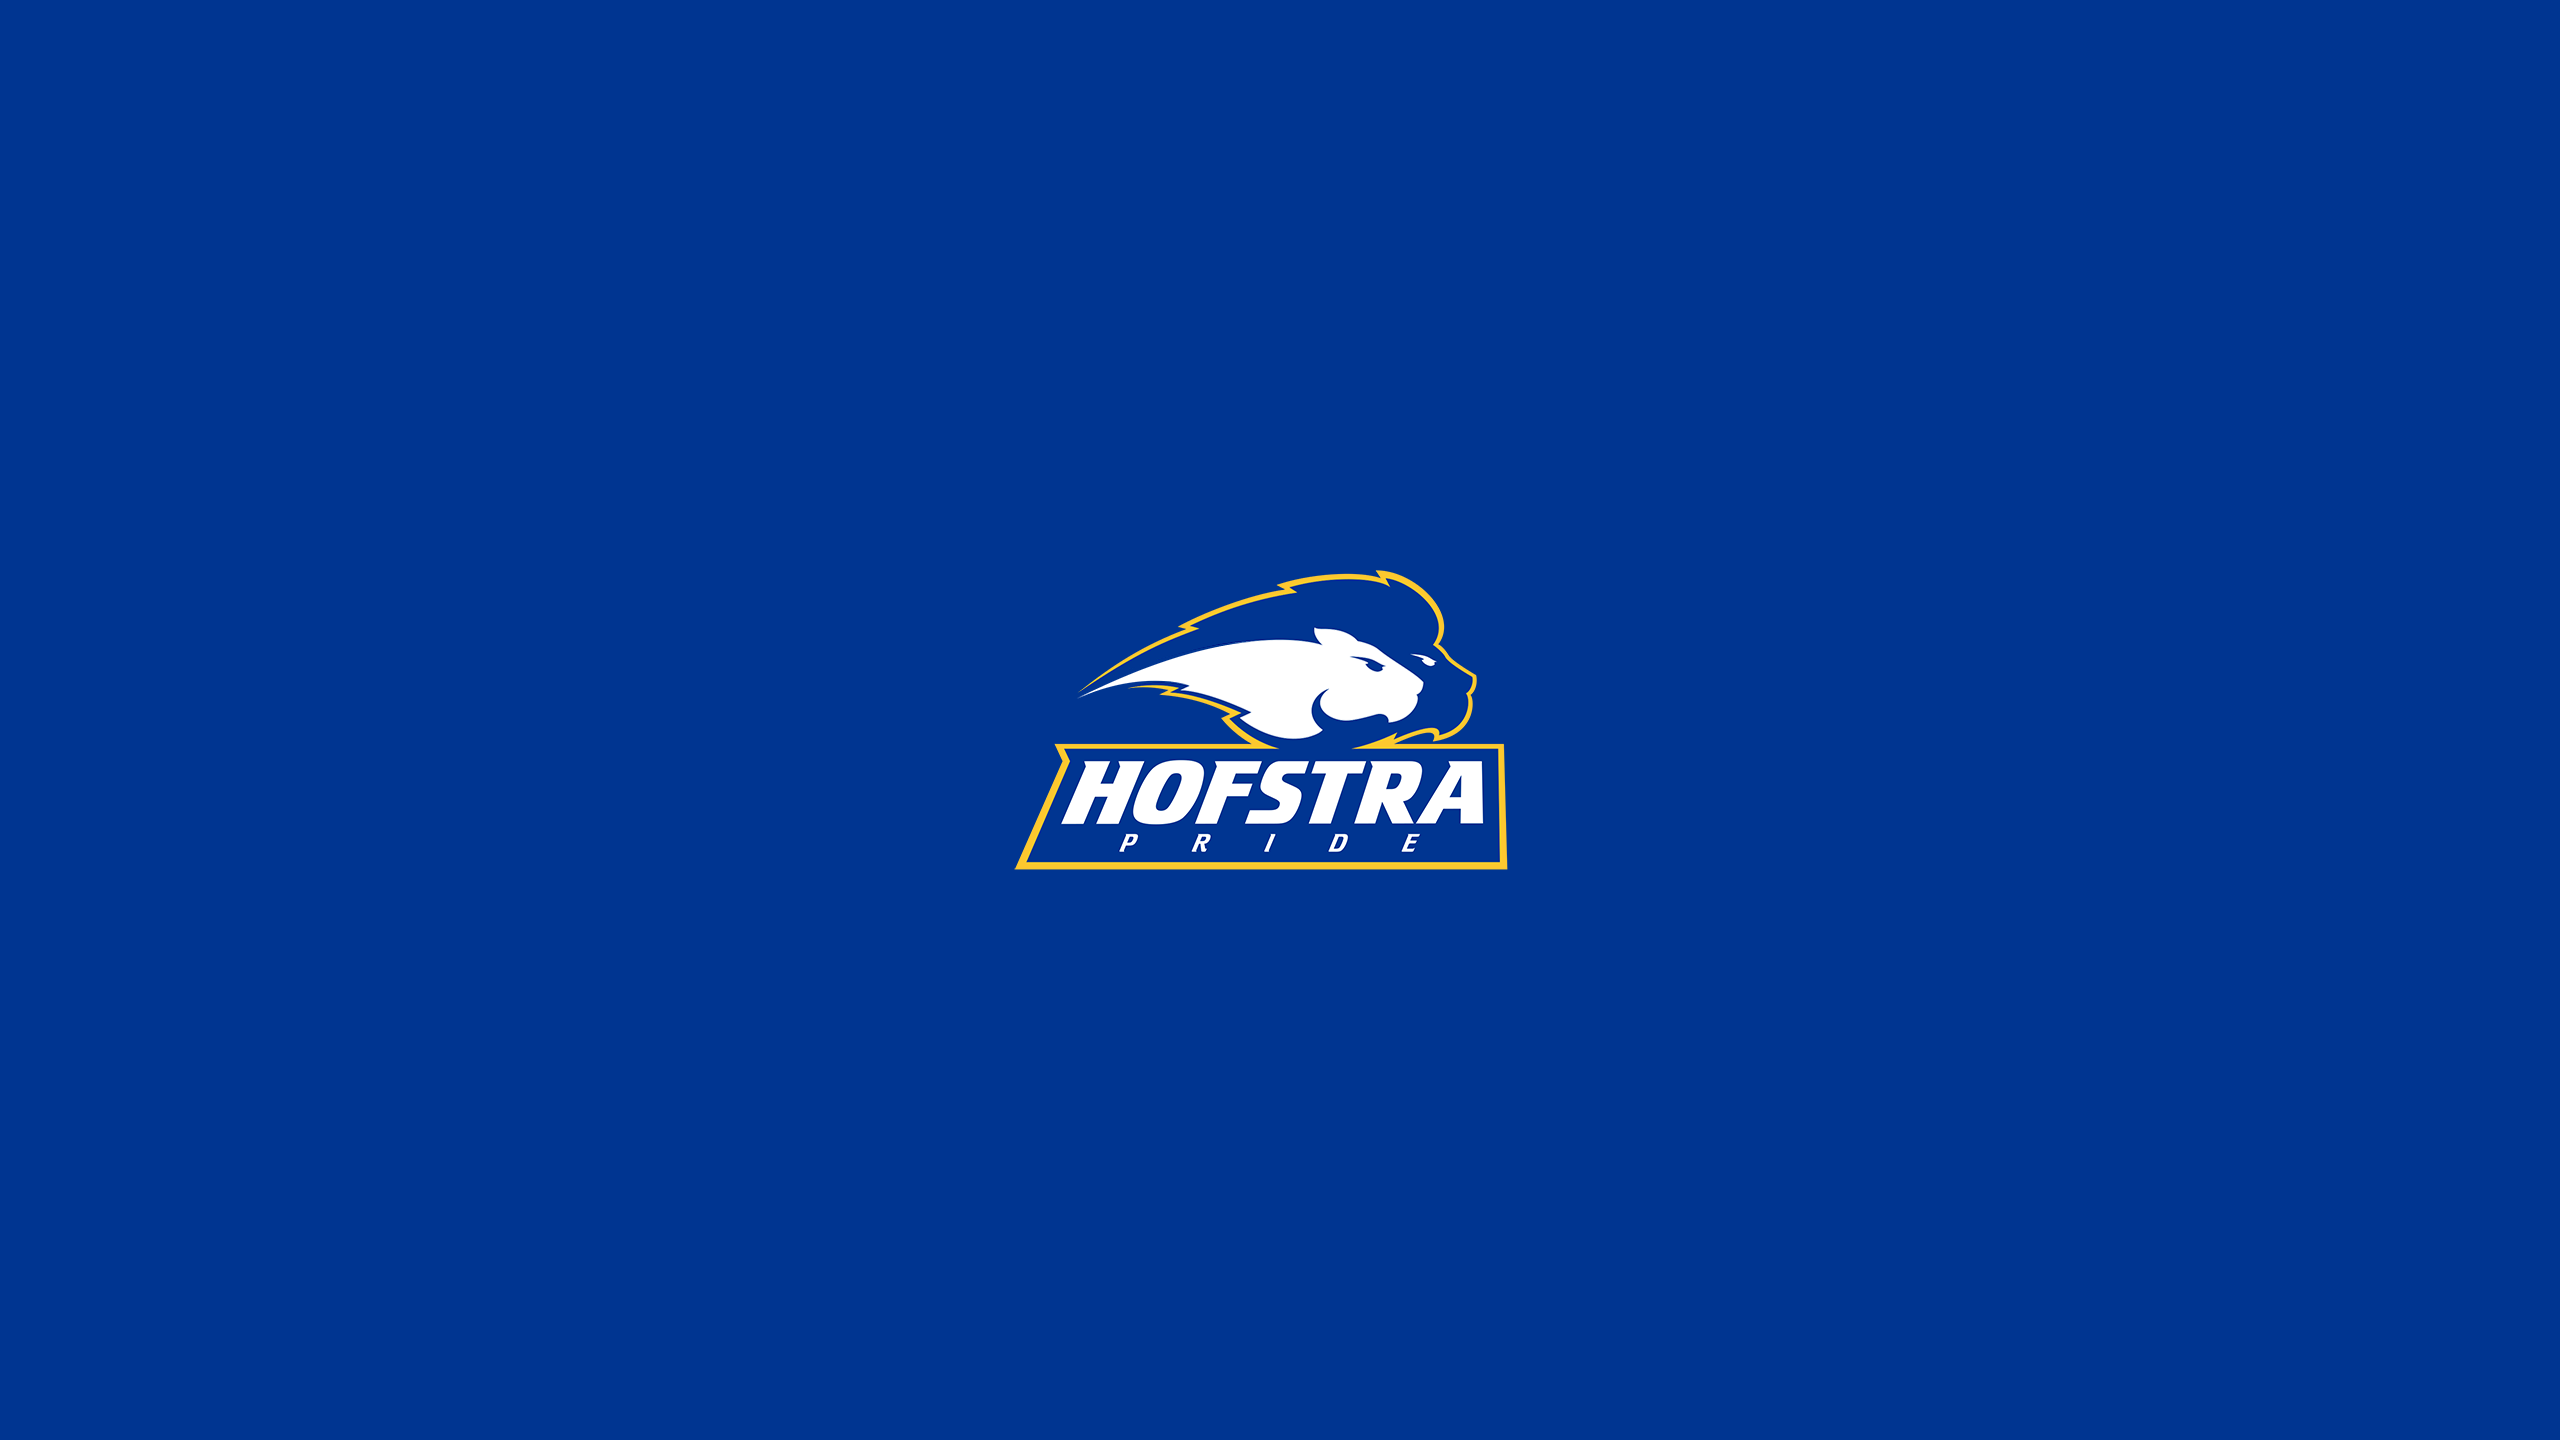 Hofstra Pride Basketball - NCAAB - Square Bettor